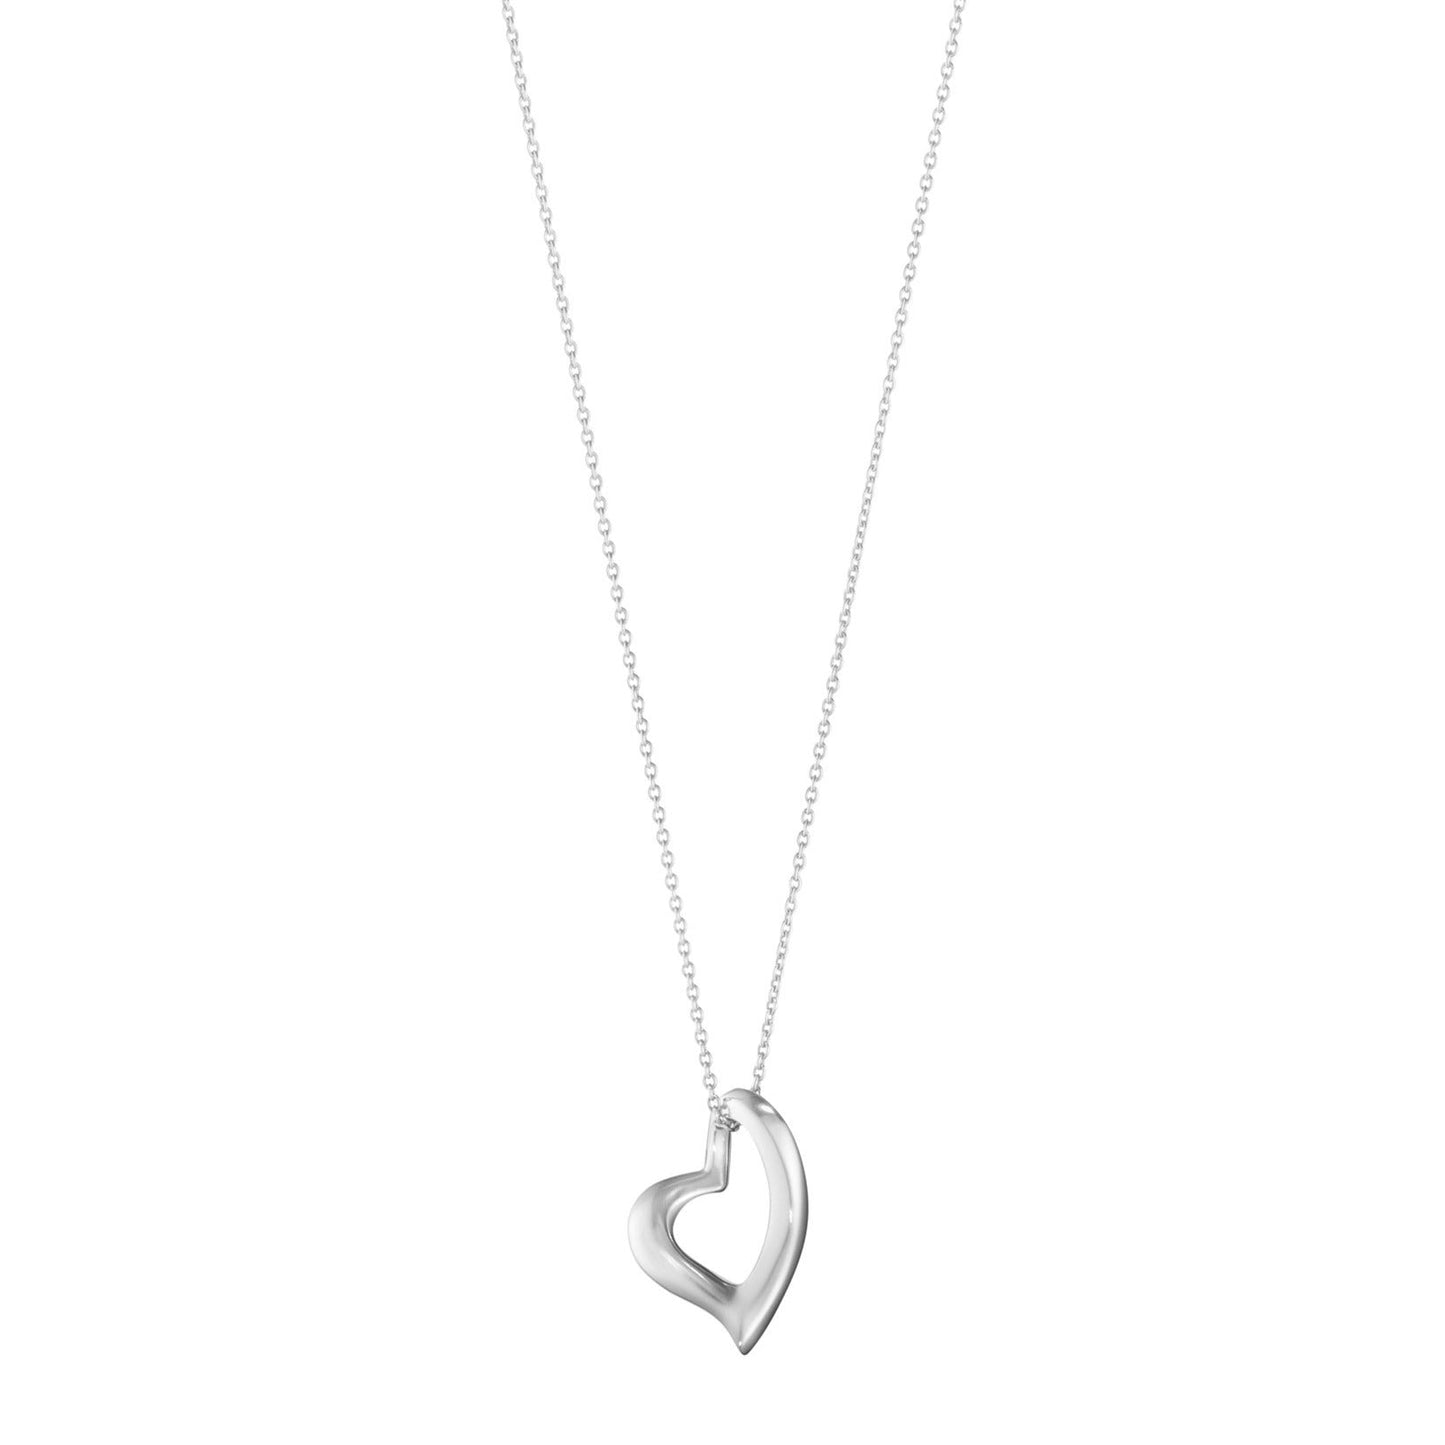 Georg Jensen Silver Hearts of Georg Jensen Pendant Necklace